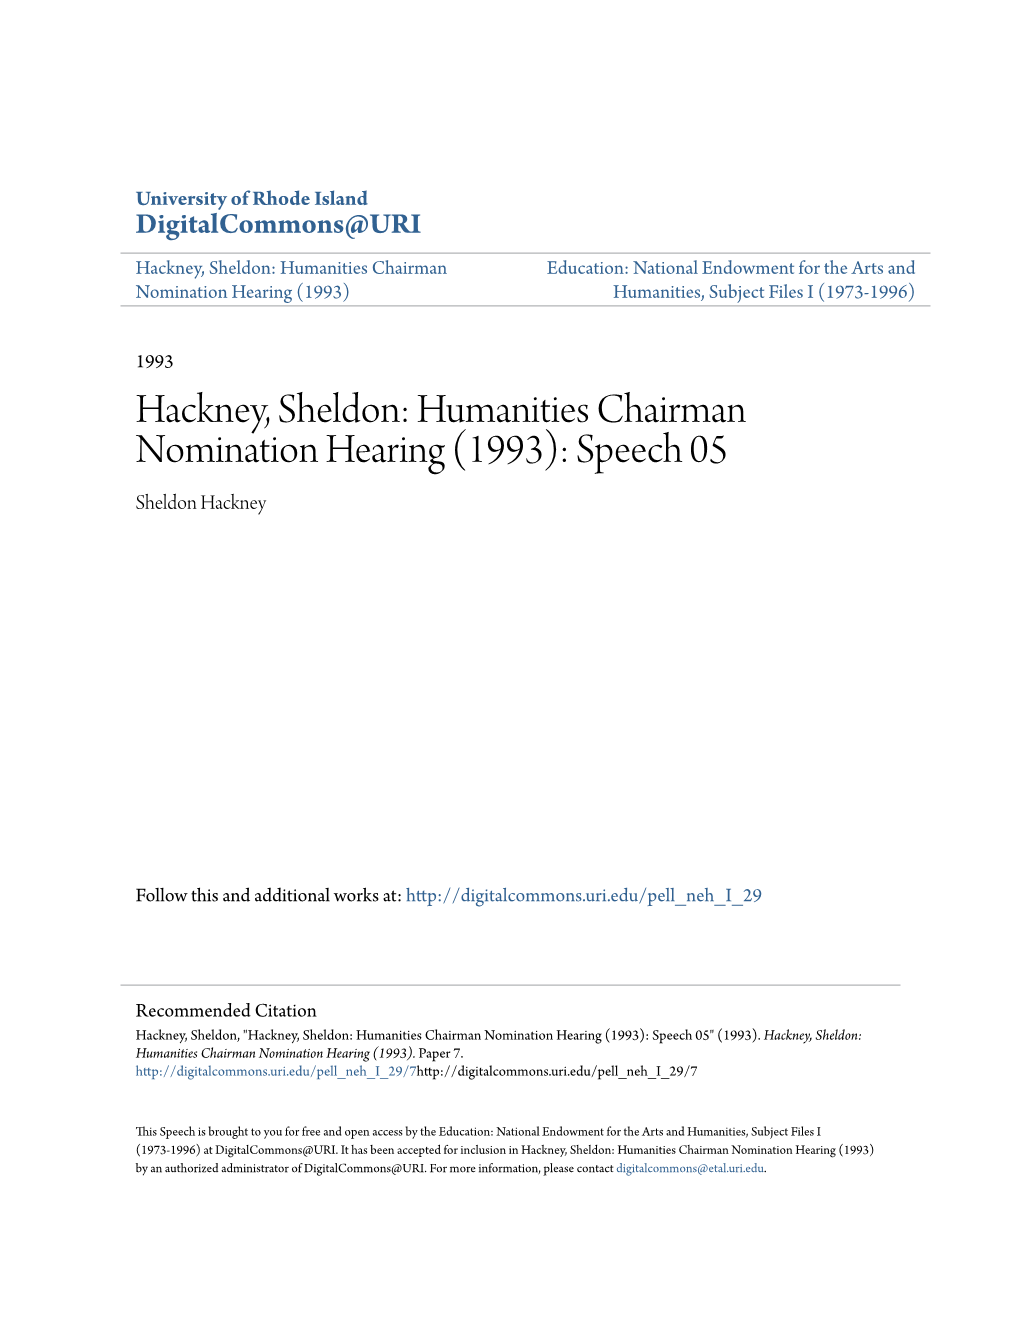 Hackney, Sheldon: Humanities Chairman Nomination Hearing (1993): Speech 05 Sheldon Hackney